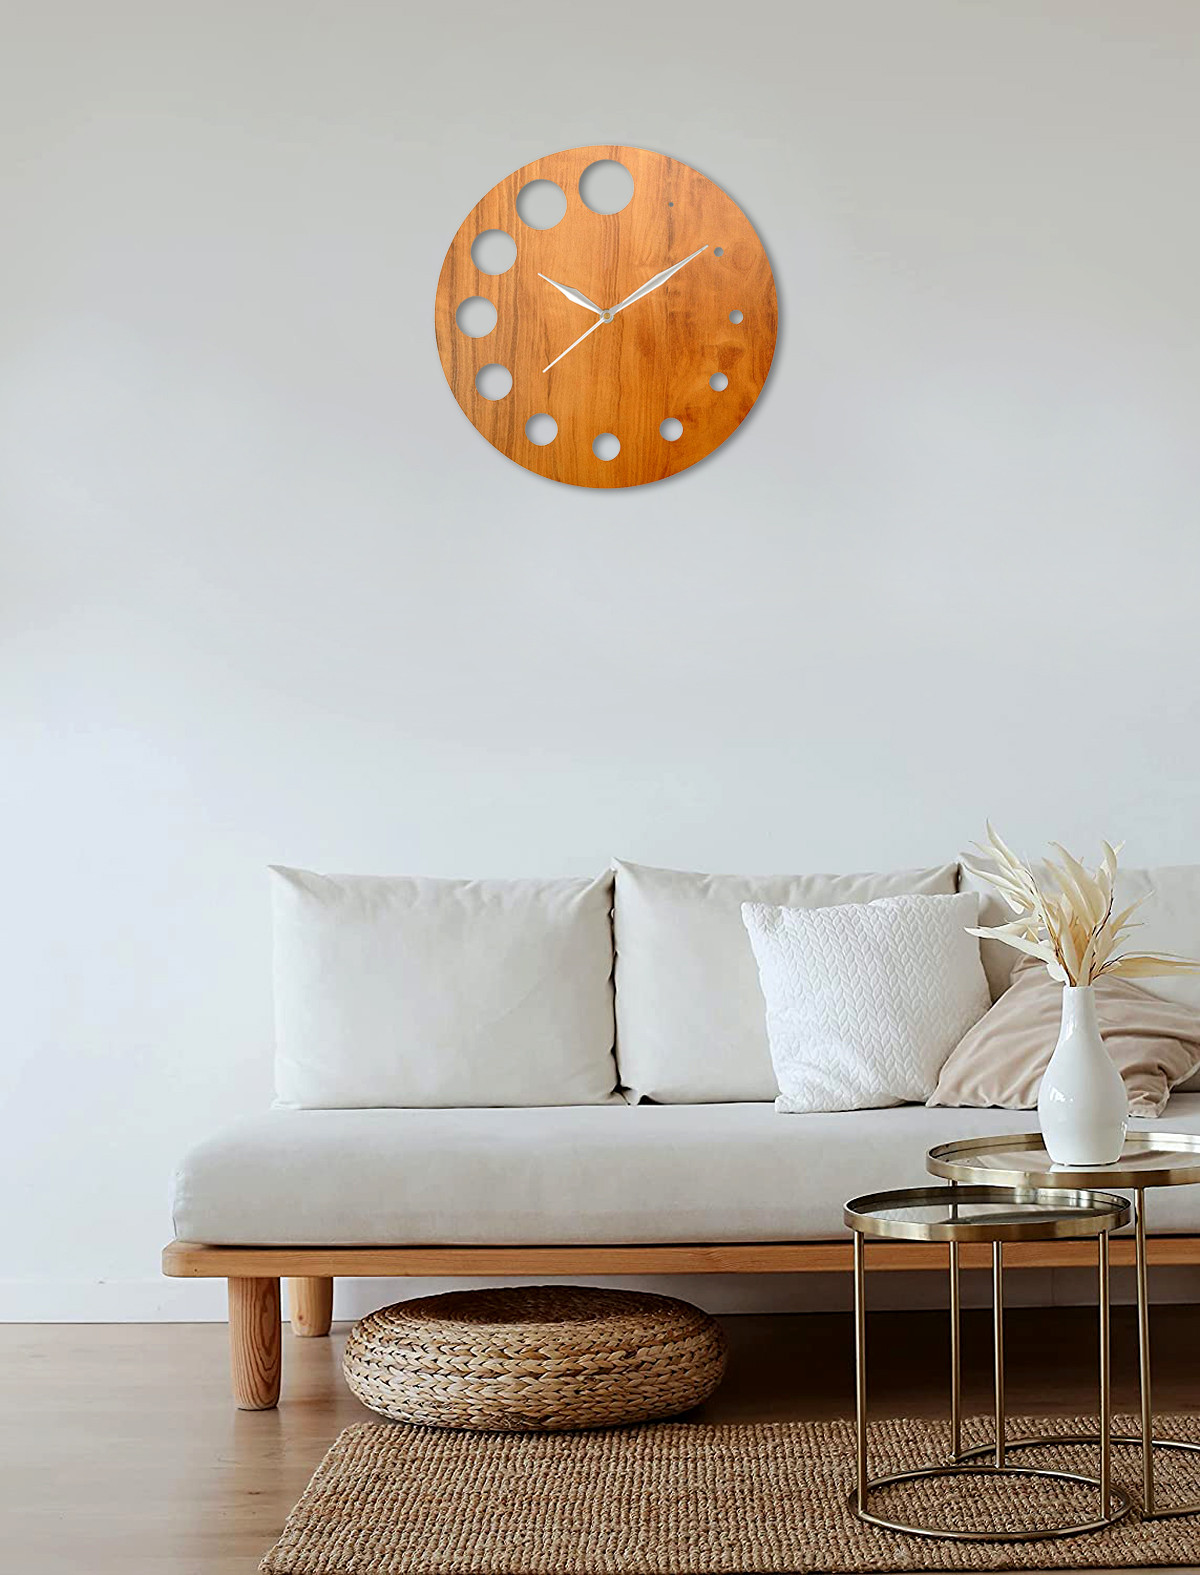 Kuber Industries Wooden Decorative Round Wall Clock For Home/Kitchen/Office (Light Brown)-HS43KUBMART26739